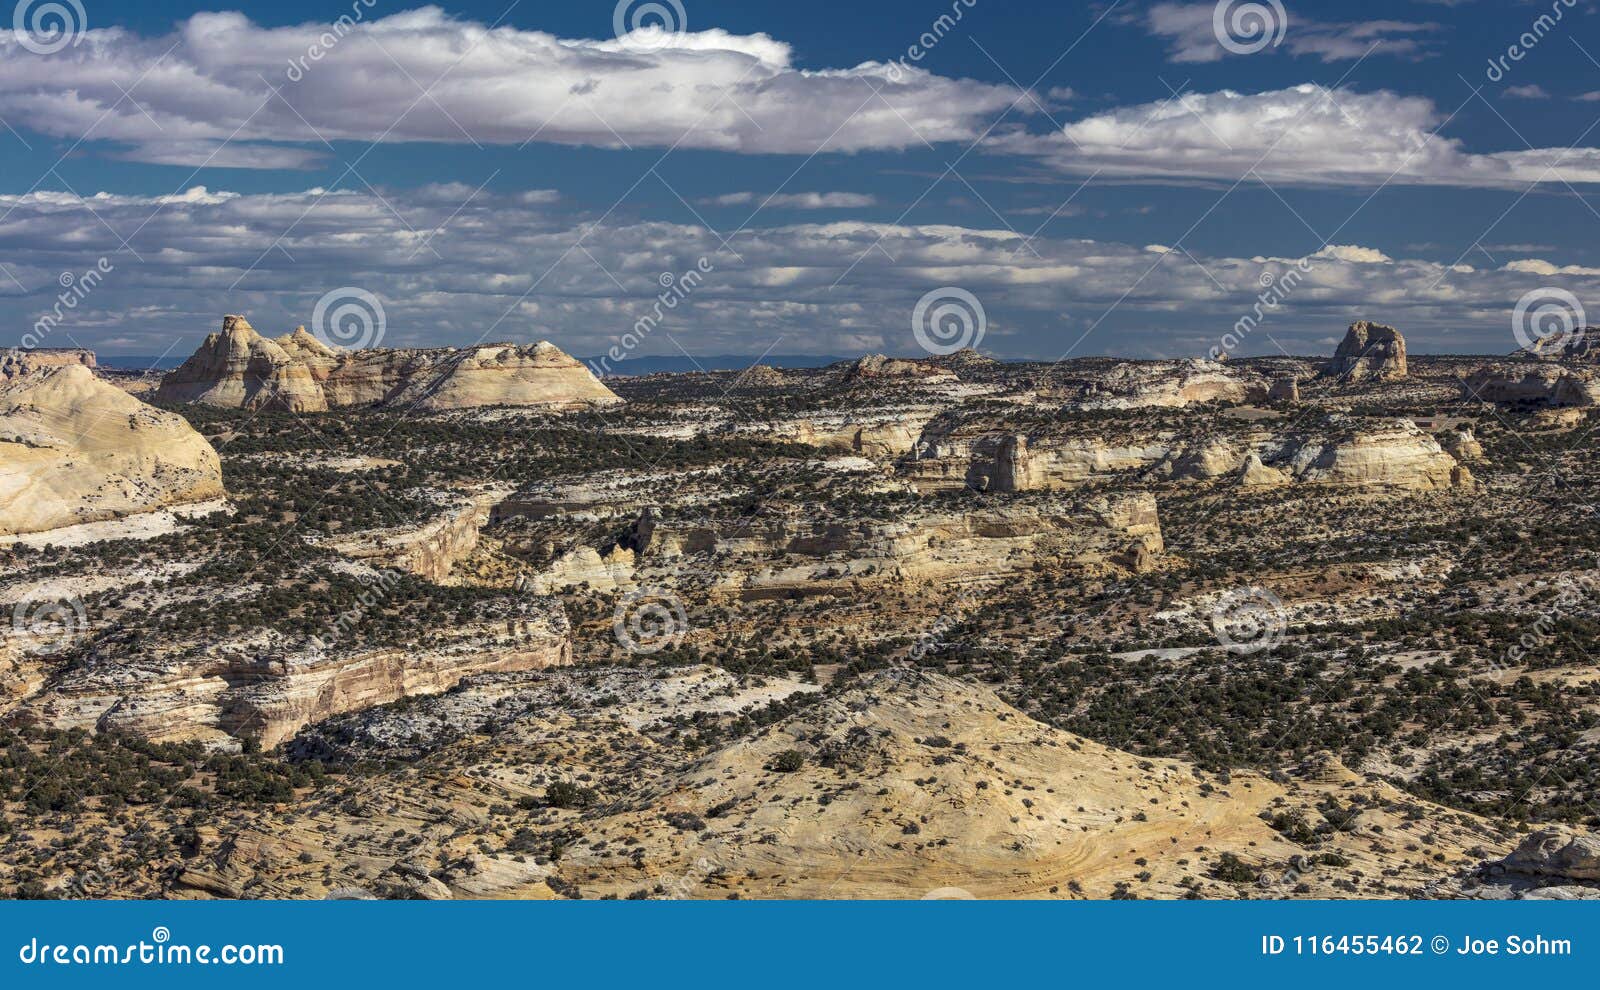 remote rock landscape along interstate 70 western colorado near